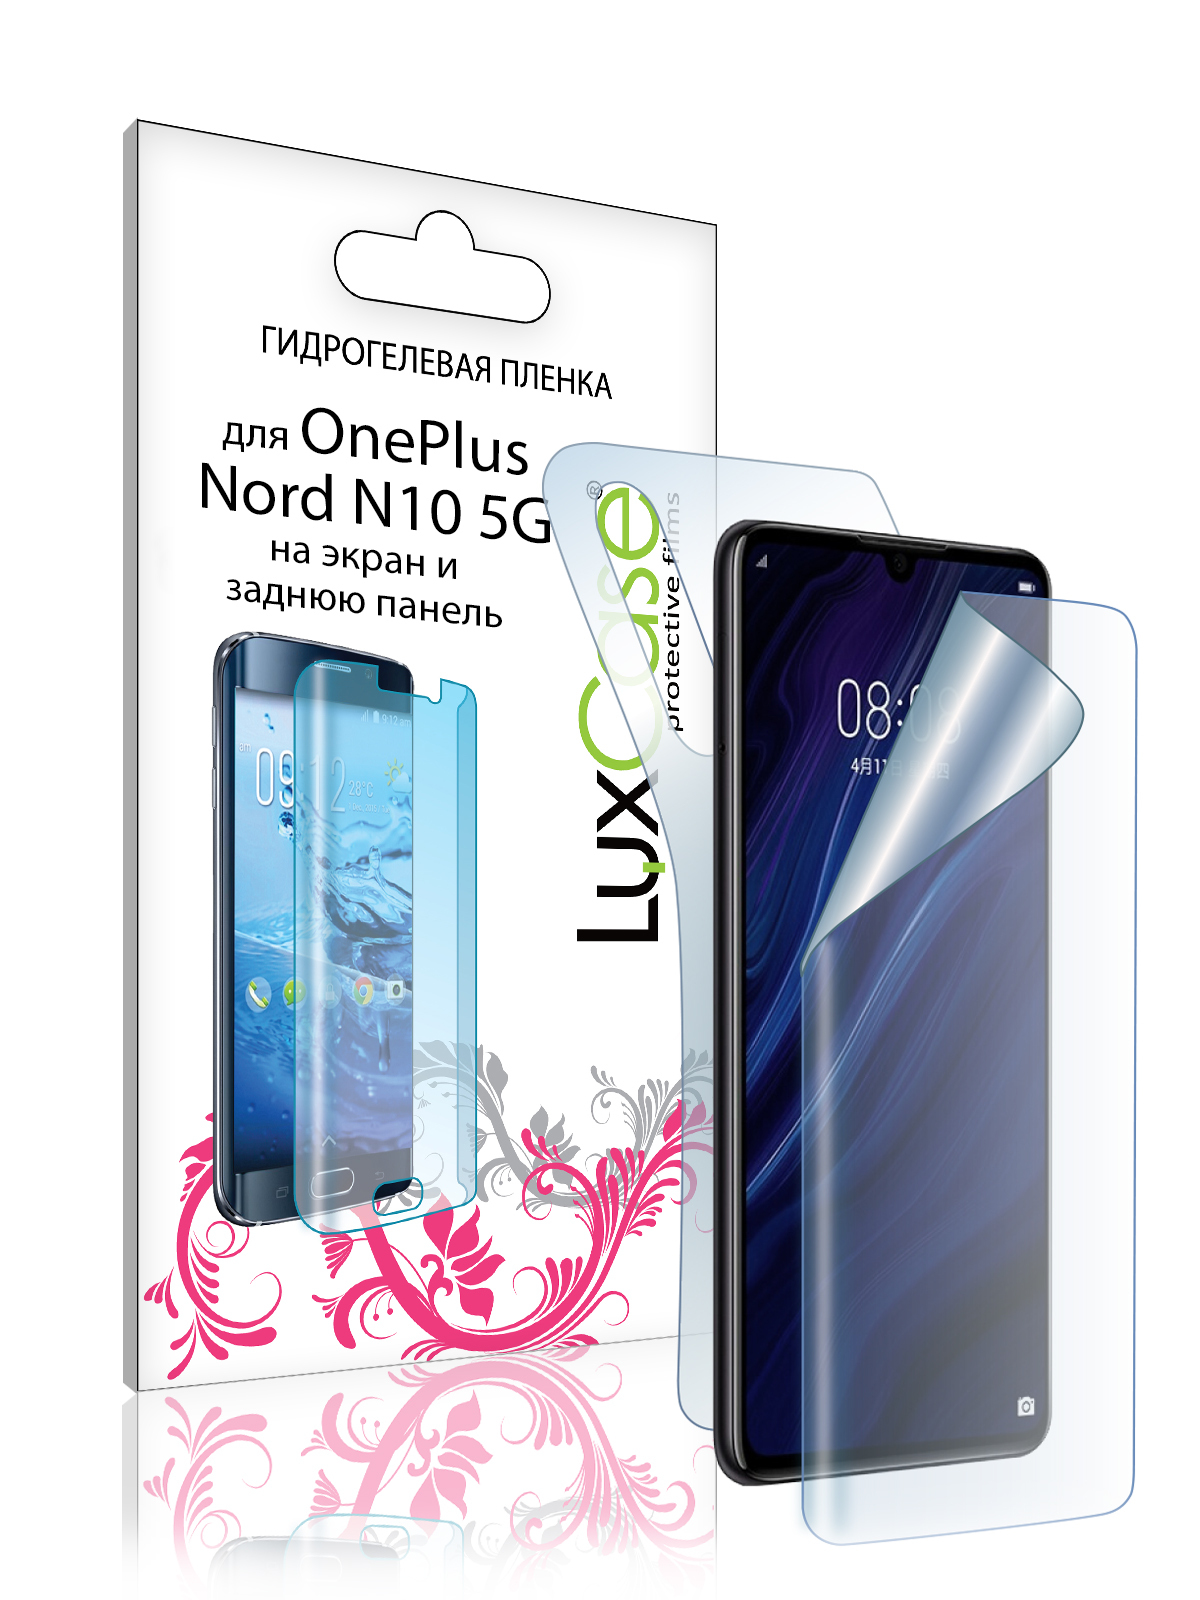 Пленка гидрогелевая LuxCase для OnePlus Nord N10 5G 0.14mm Front and Back Transparent 86565 защитная пленка luxcase для oneplus 6 back 0 14mm transparent 86163